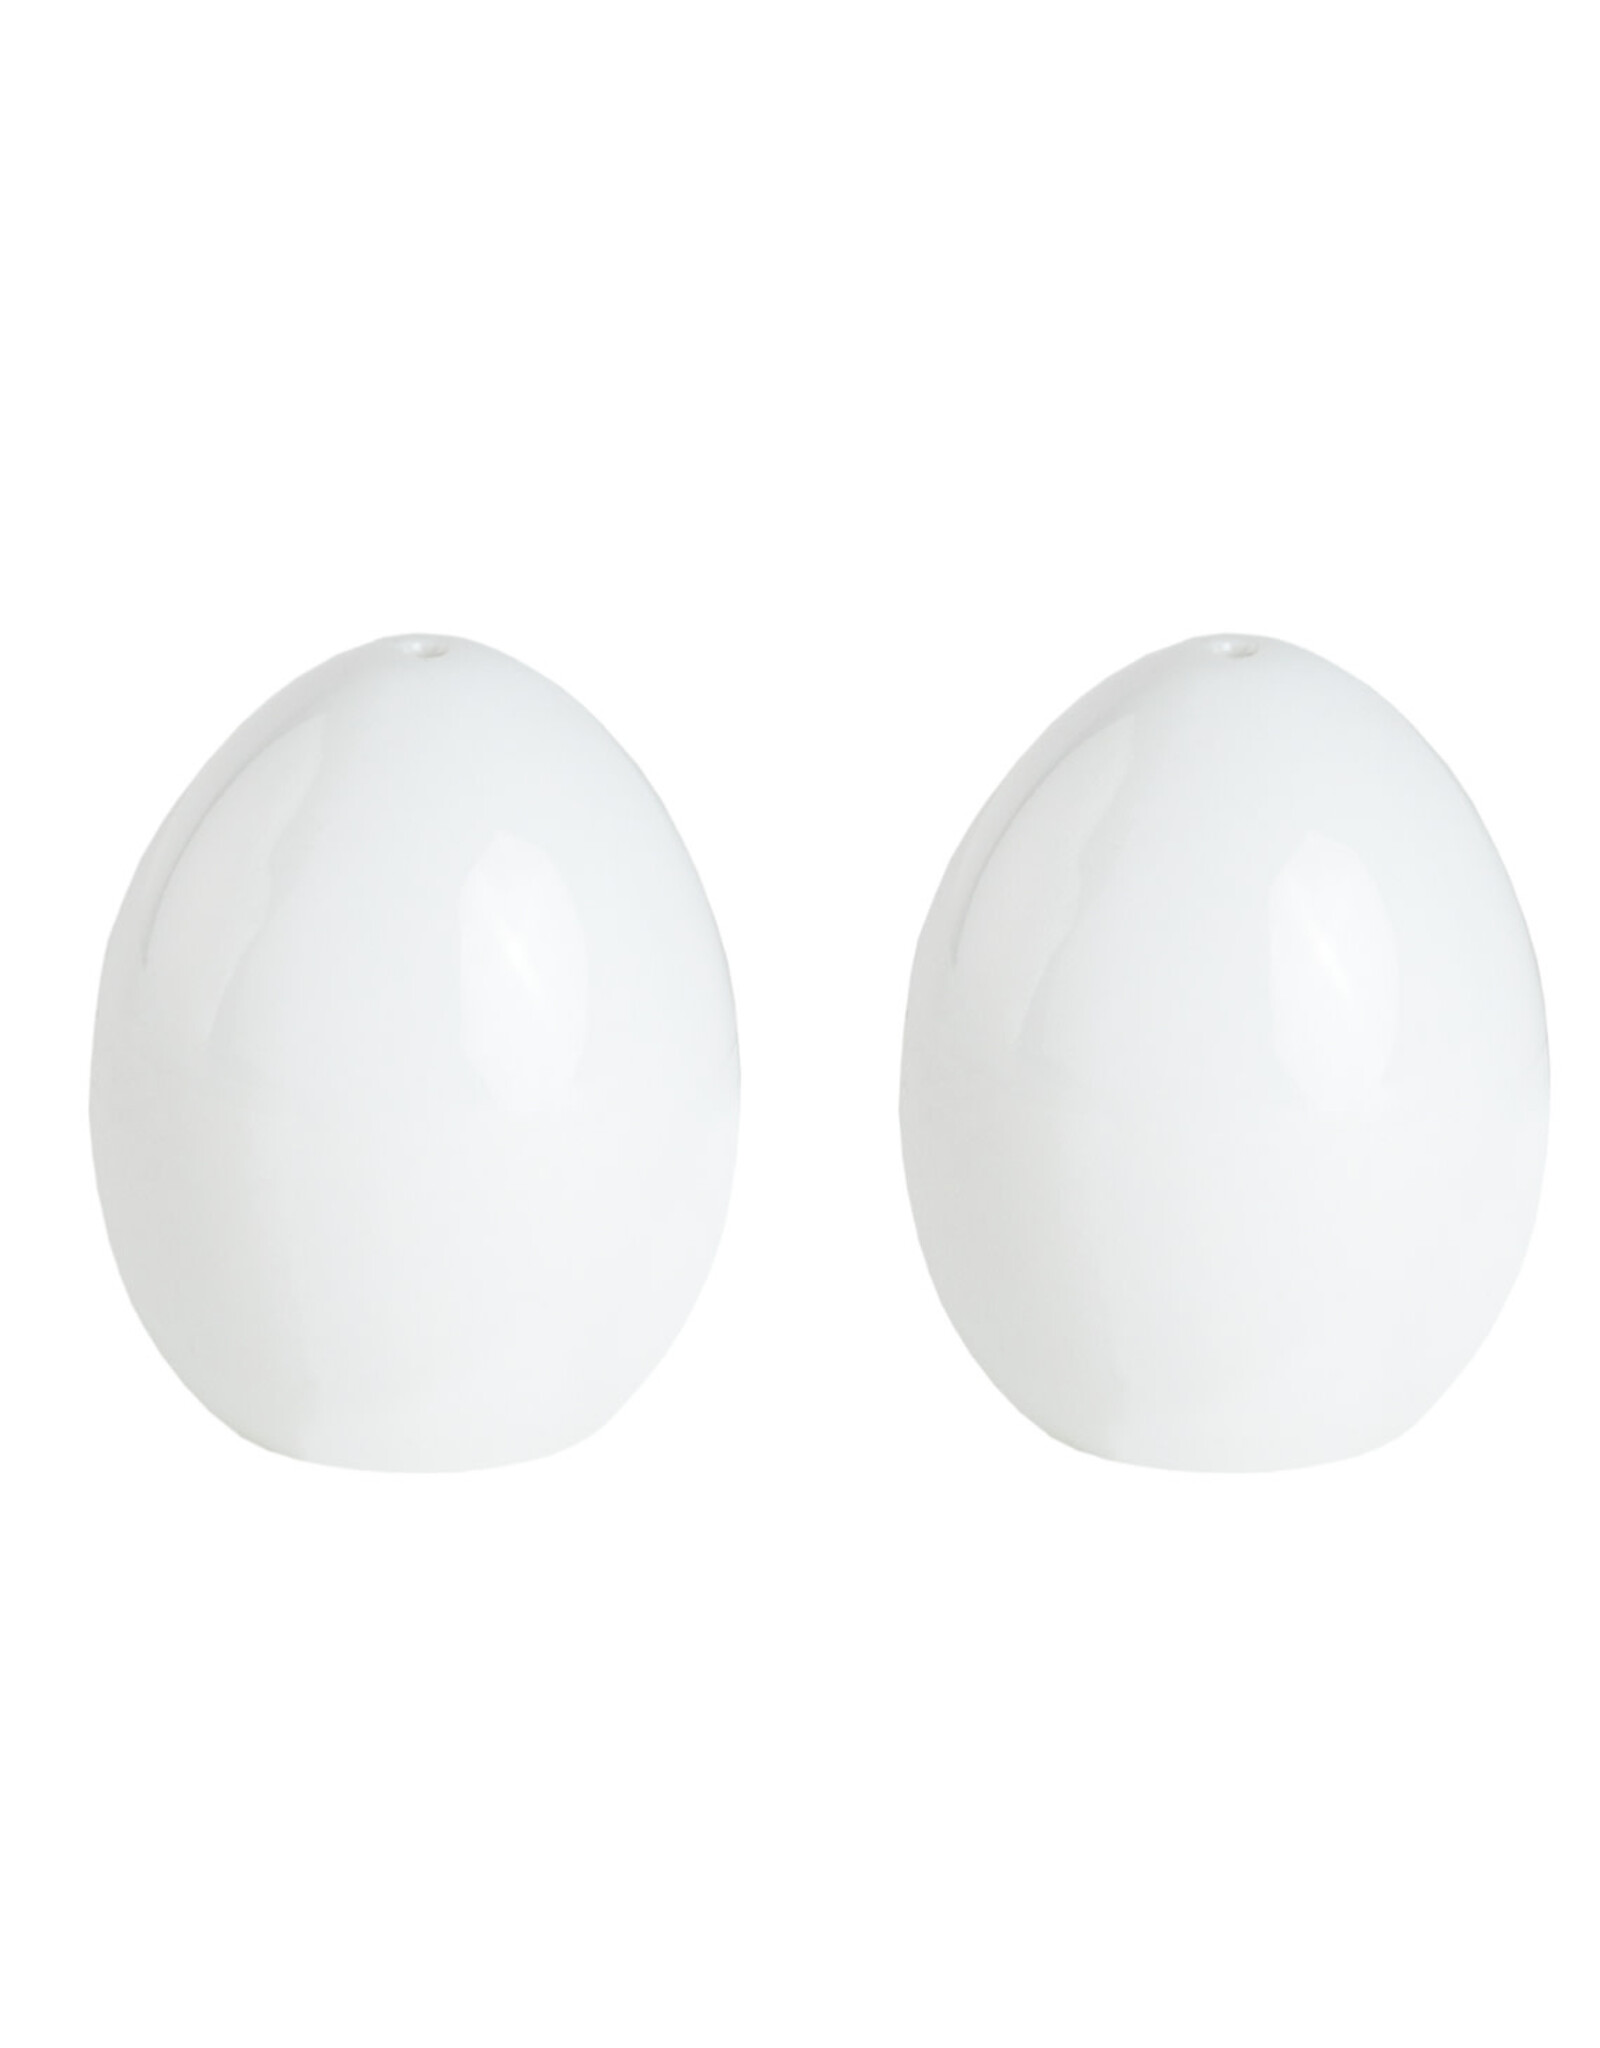 Raeder Peper en Zout set - Mini eieren - Ø3 x 4cm